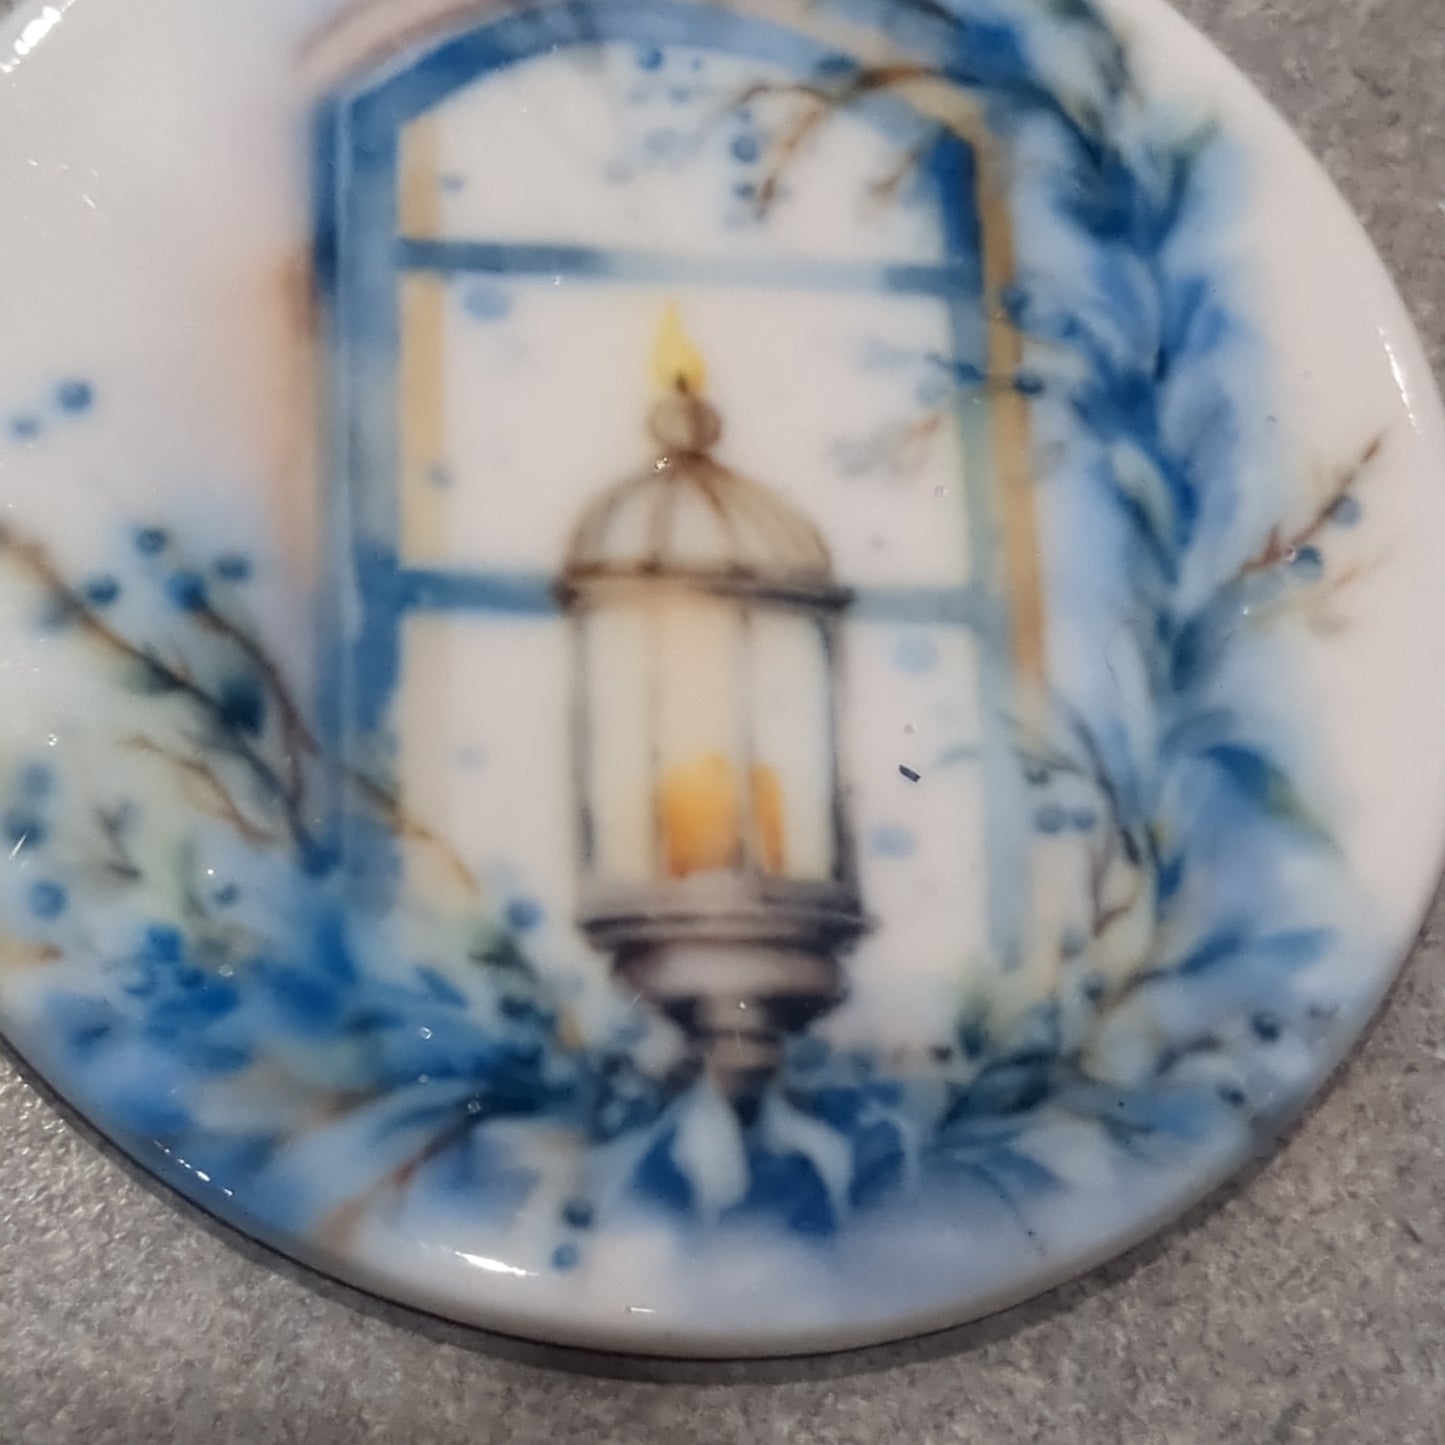 Ceramic ornament blue and white lantern in a window